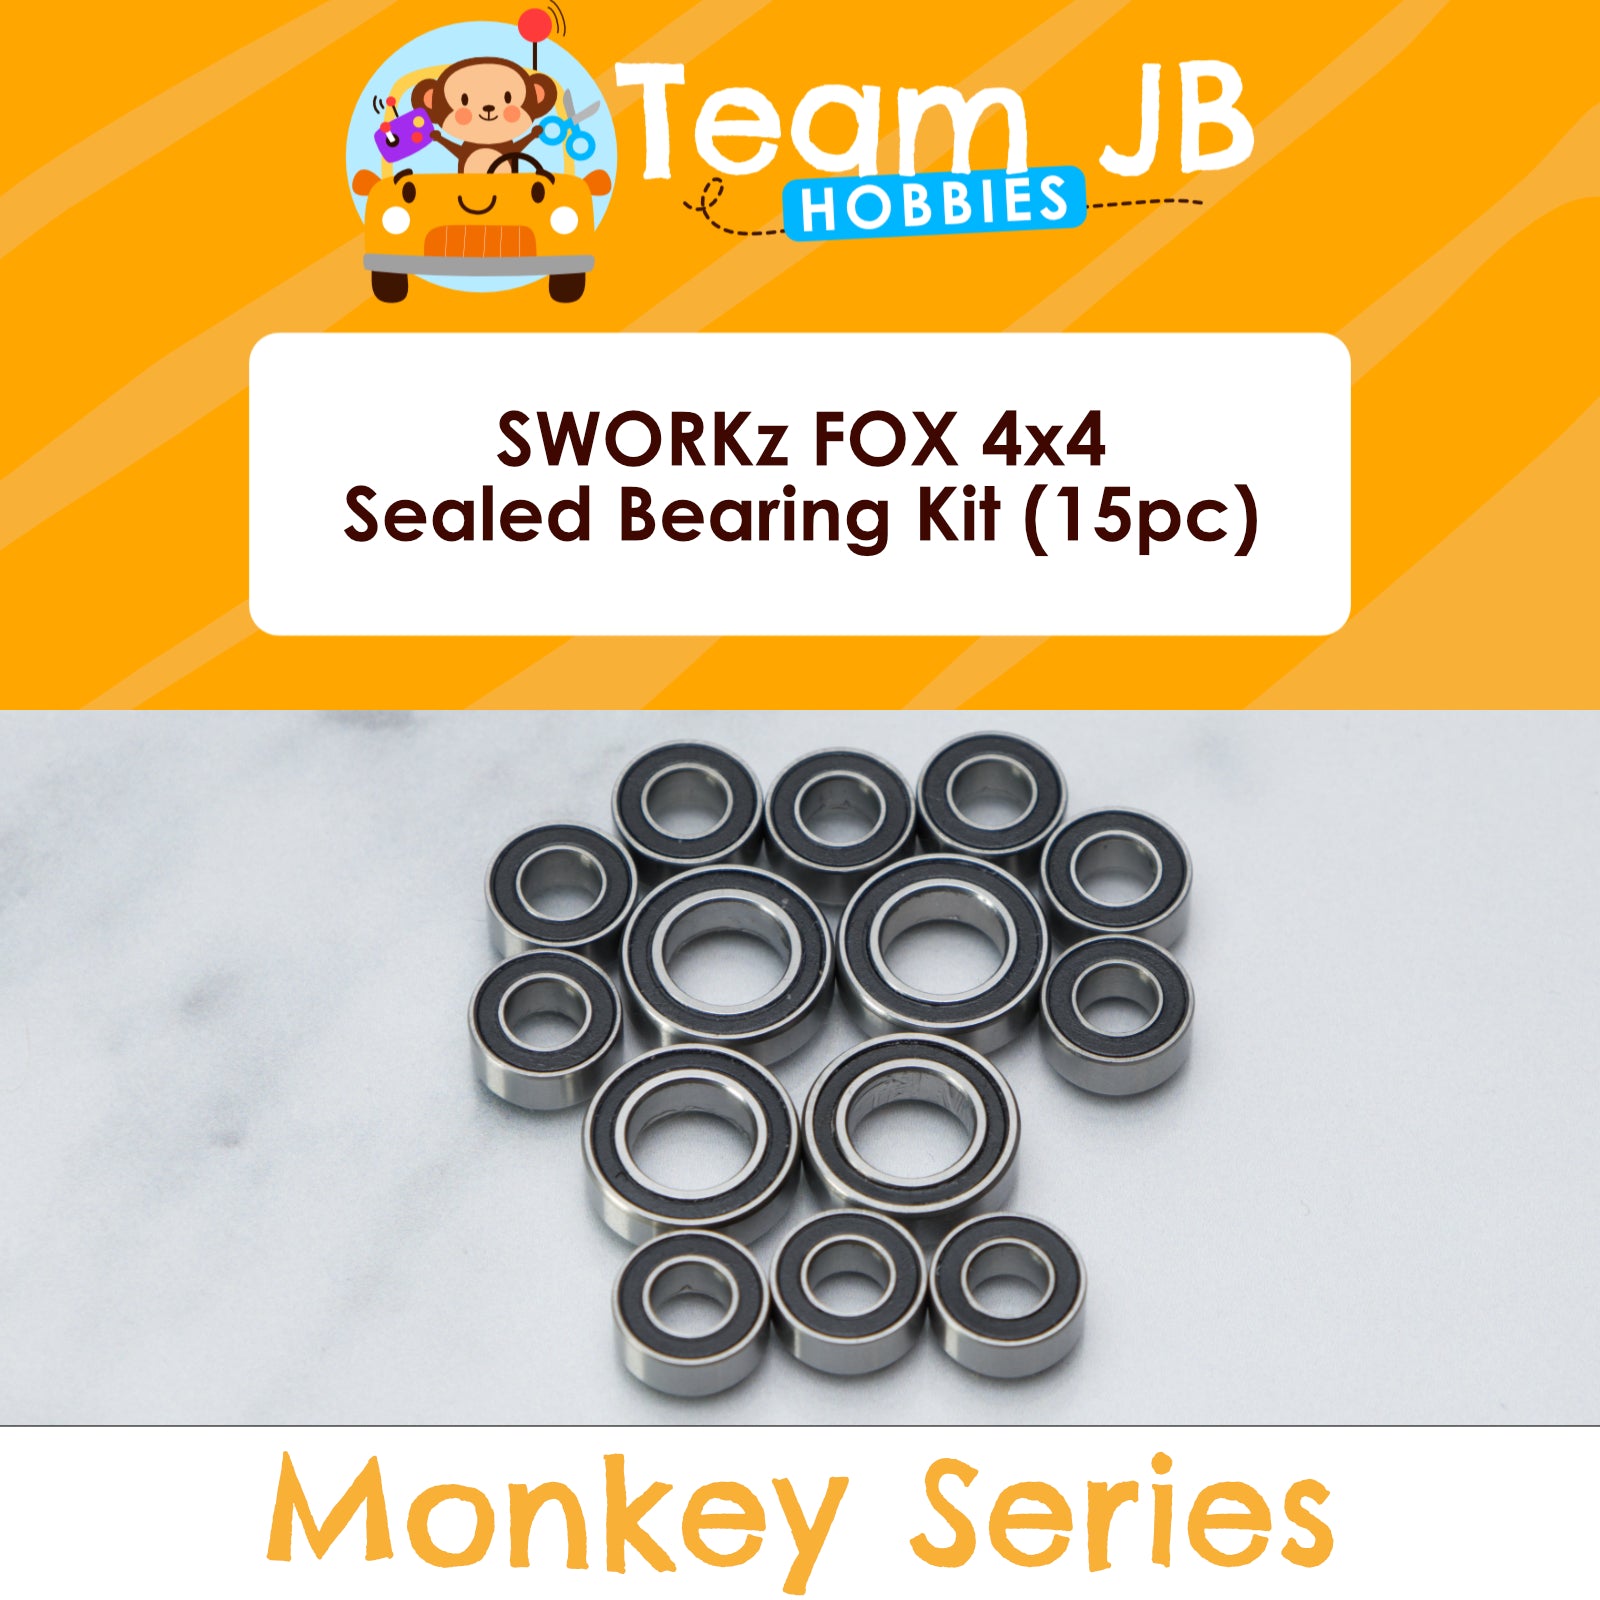 SWORKz FOX 4x4 - Sealed Bearing Kit